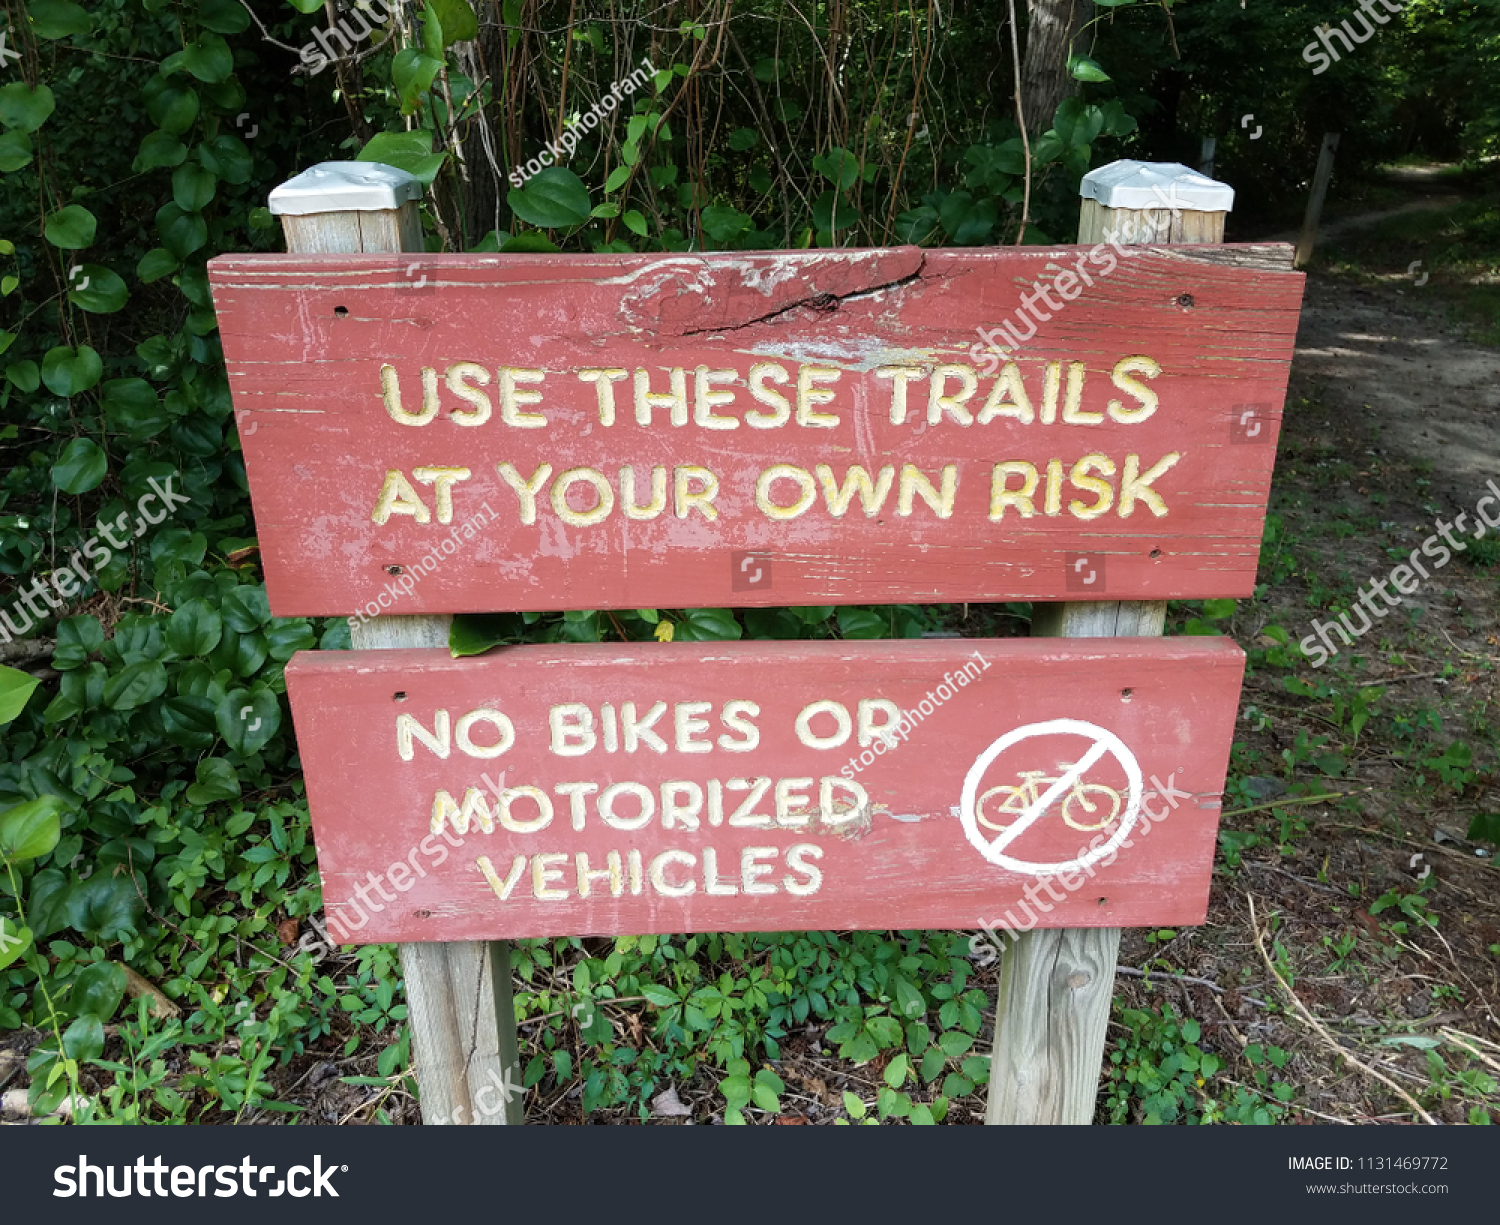 motorized trail bikes